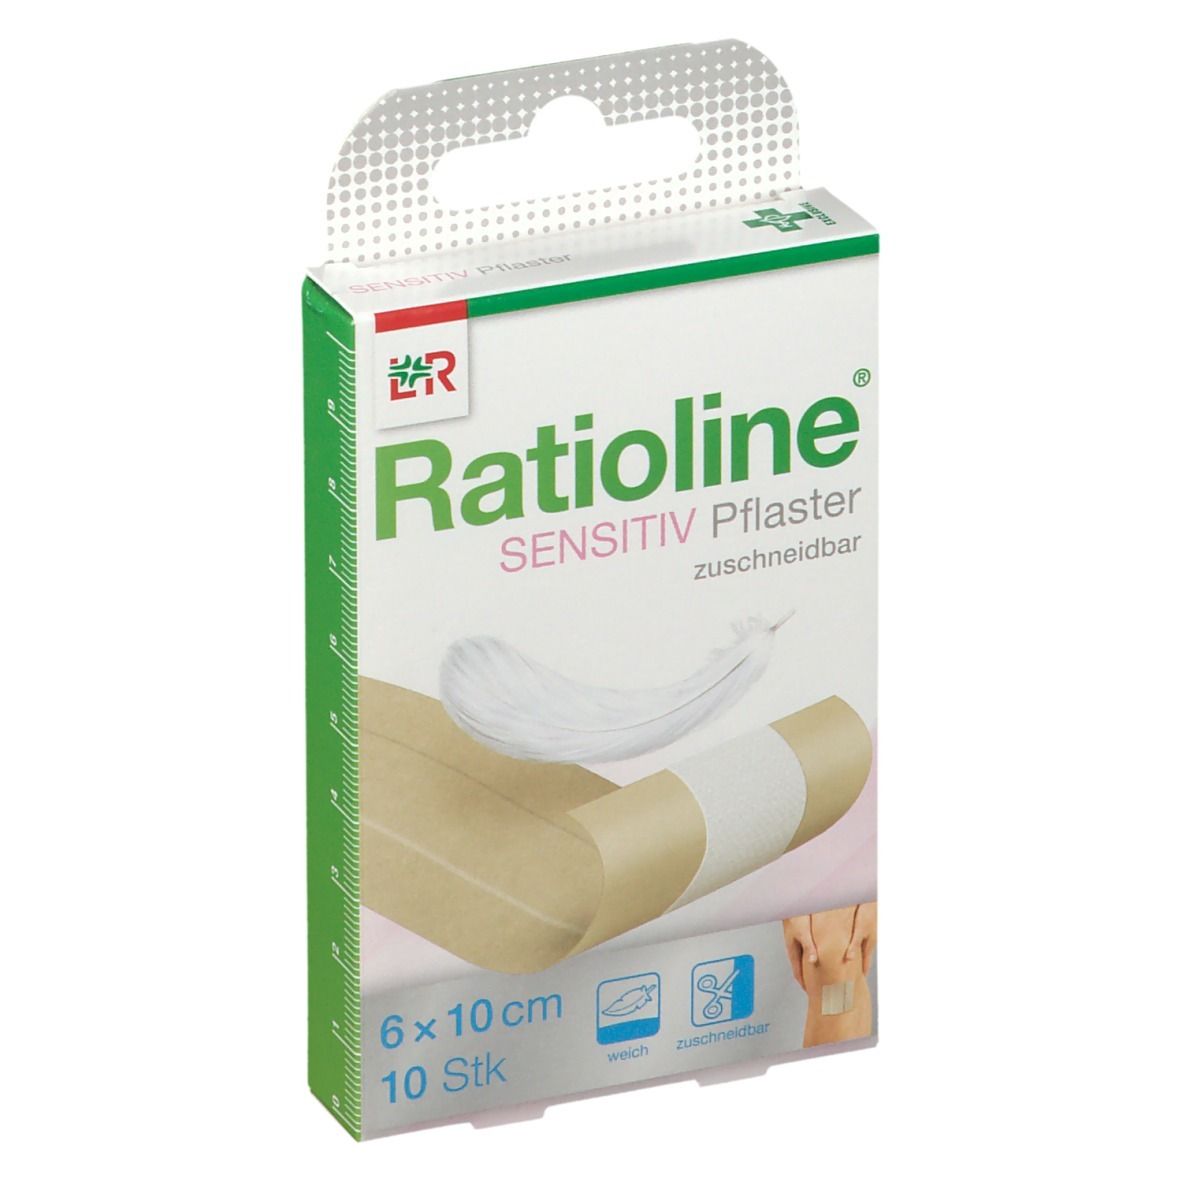 Ratioline® sensitive Wundschnellverband 6 cm x 1 m